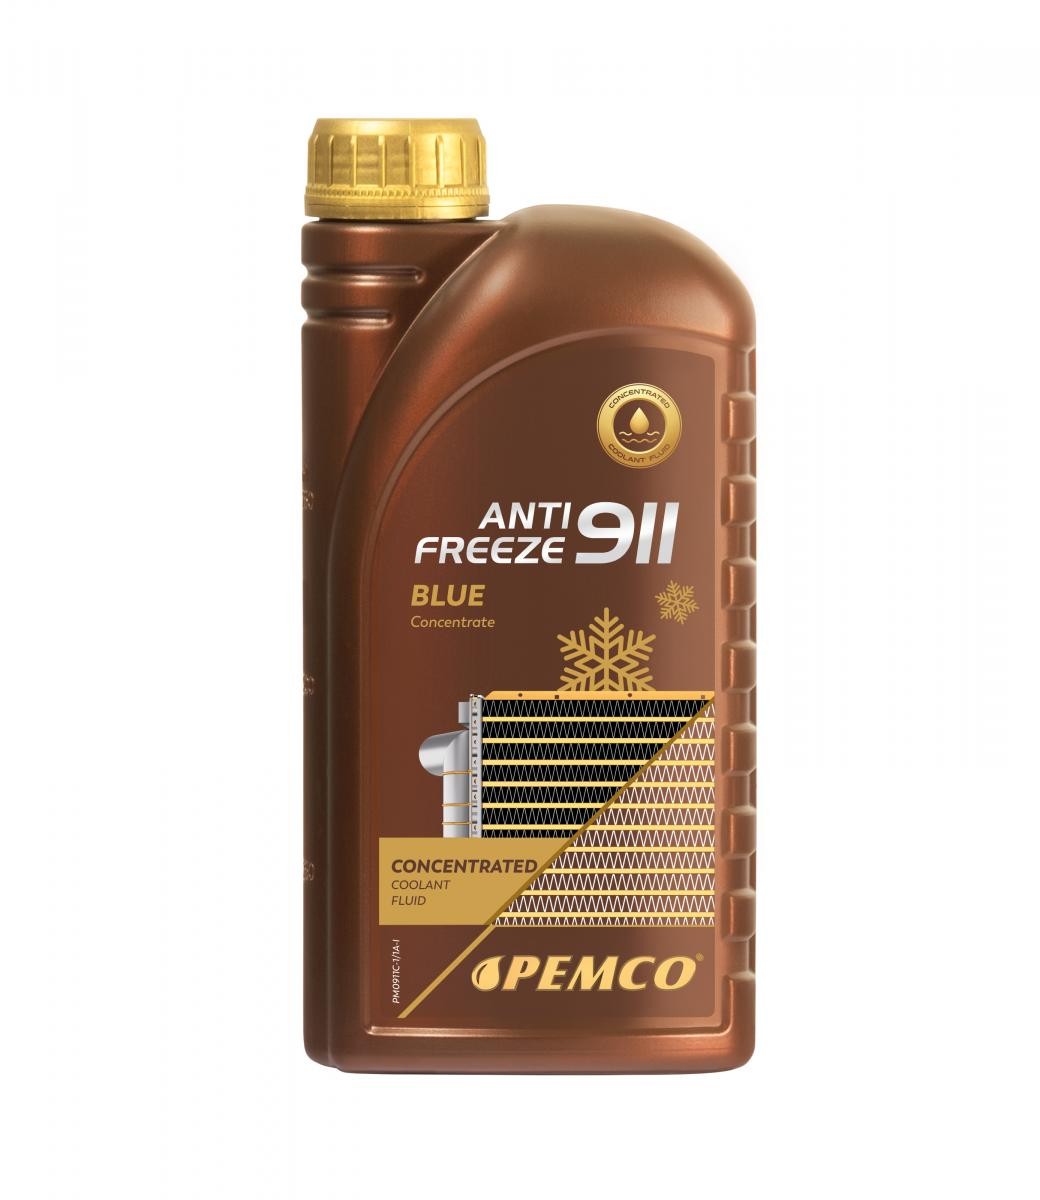 Mini Antifreeze PEMCO PM0911C-1 at a good price